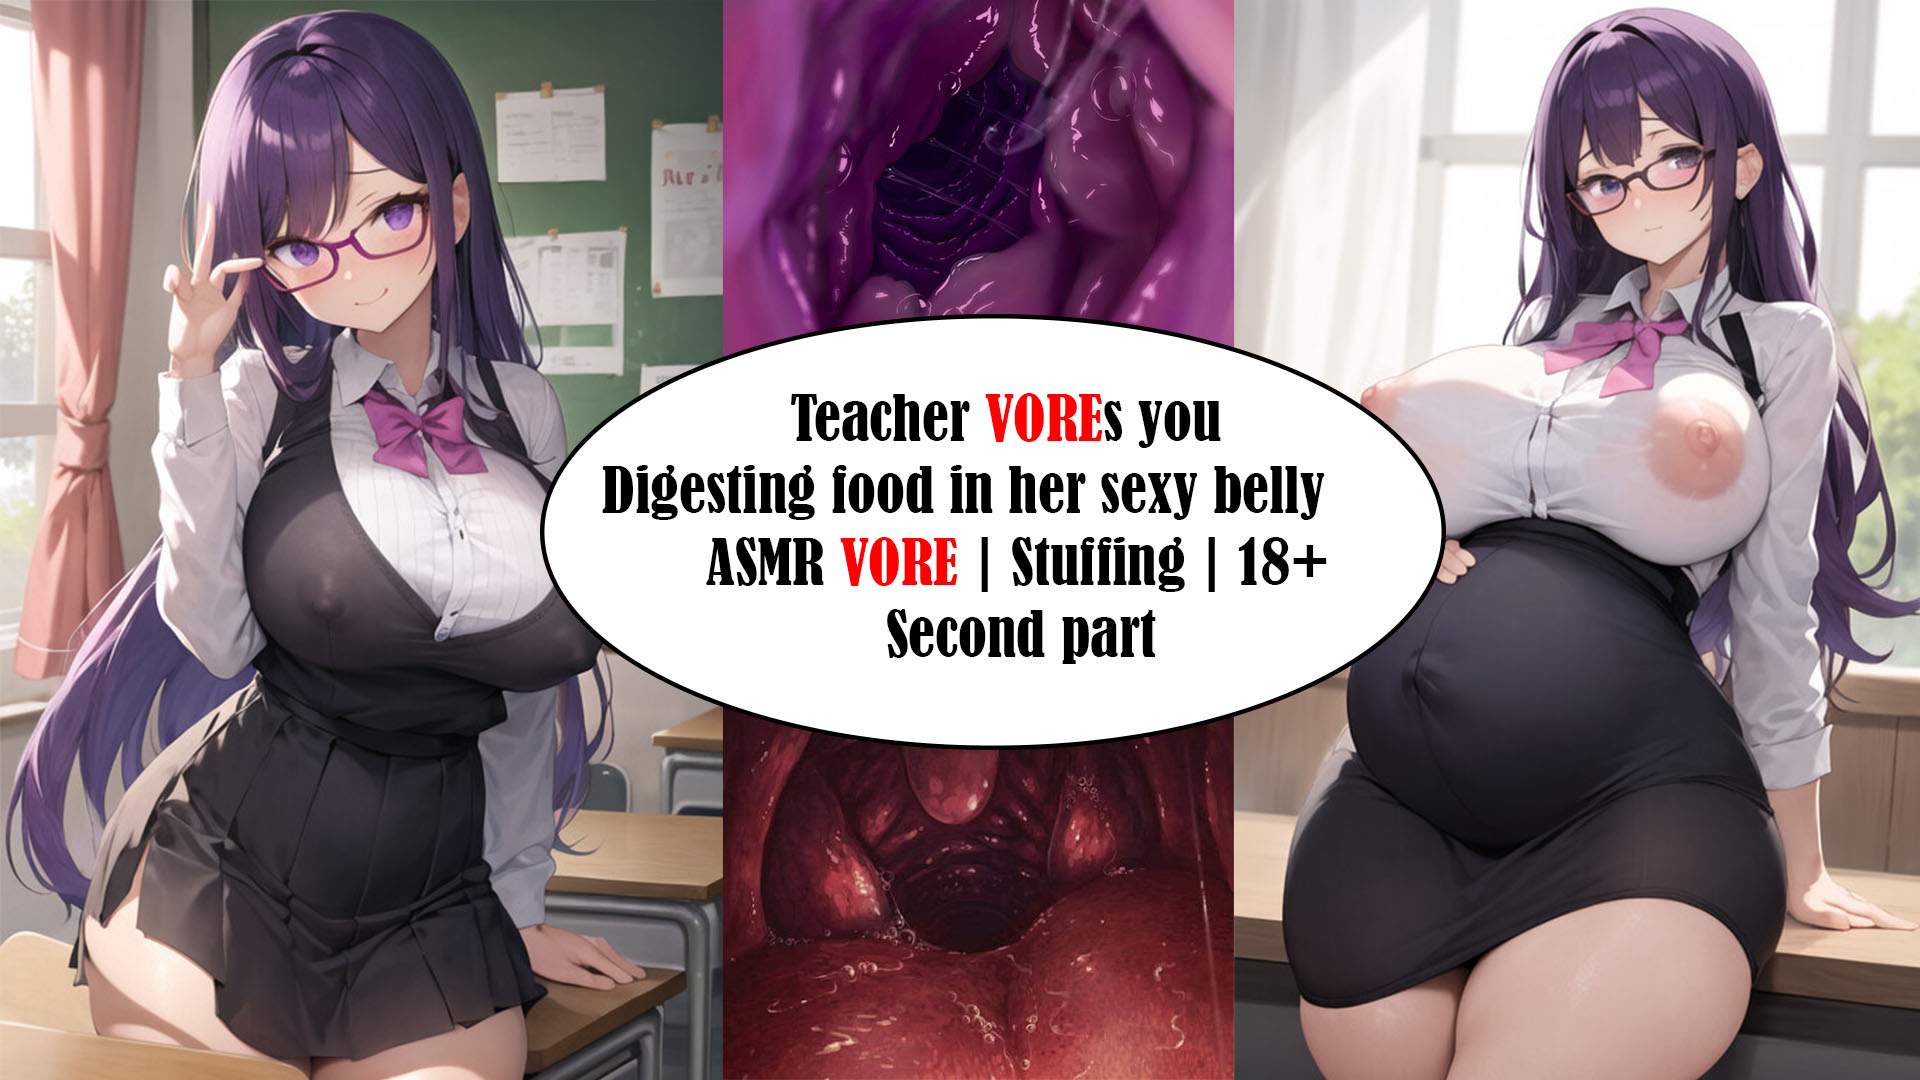 Sexy Teacher vores you 2 | Vore ... | 18+